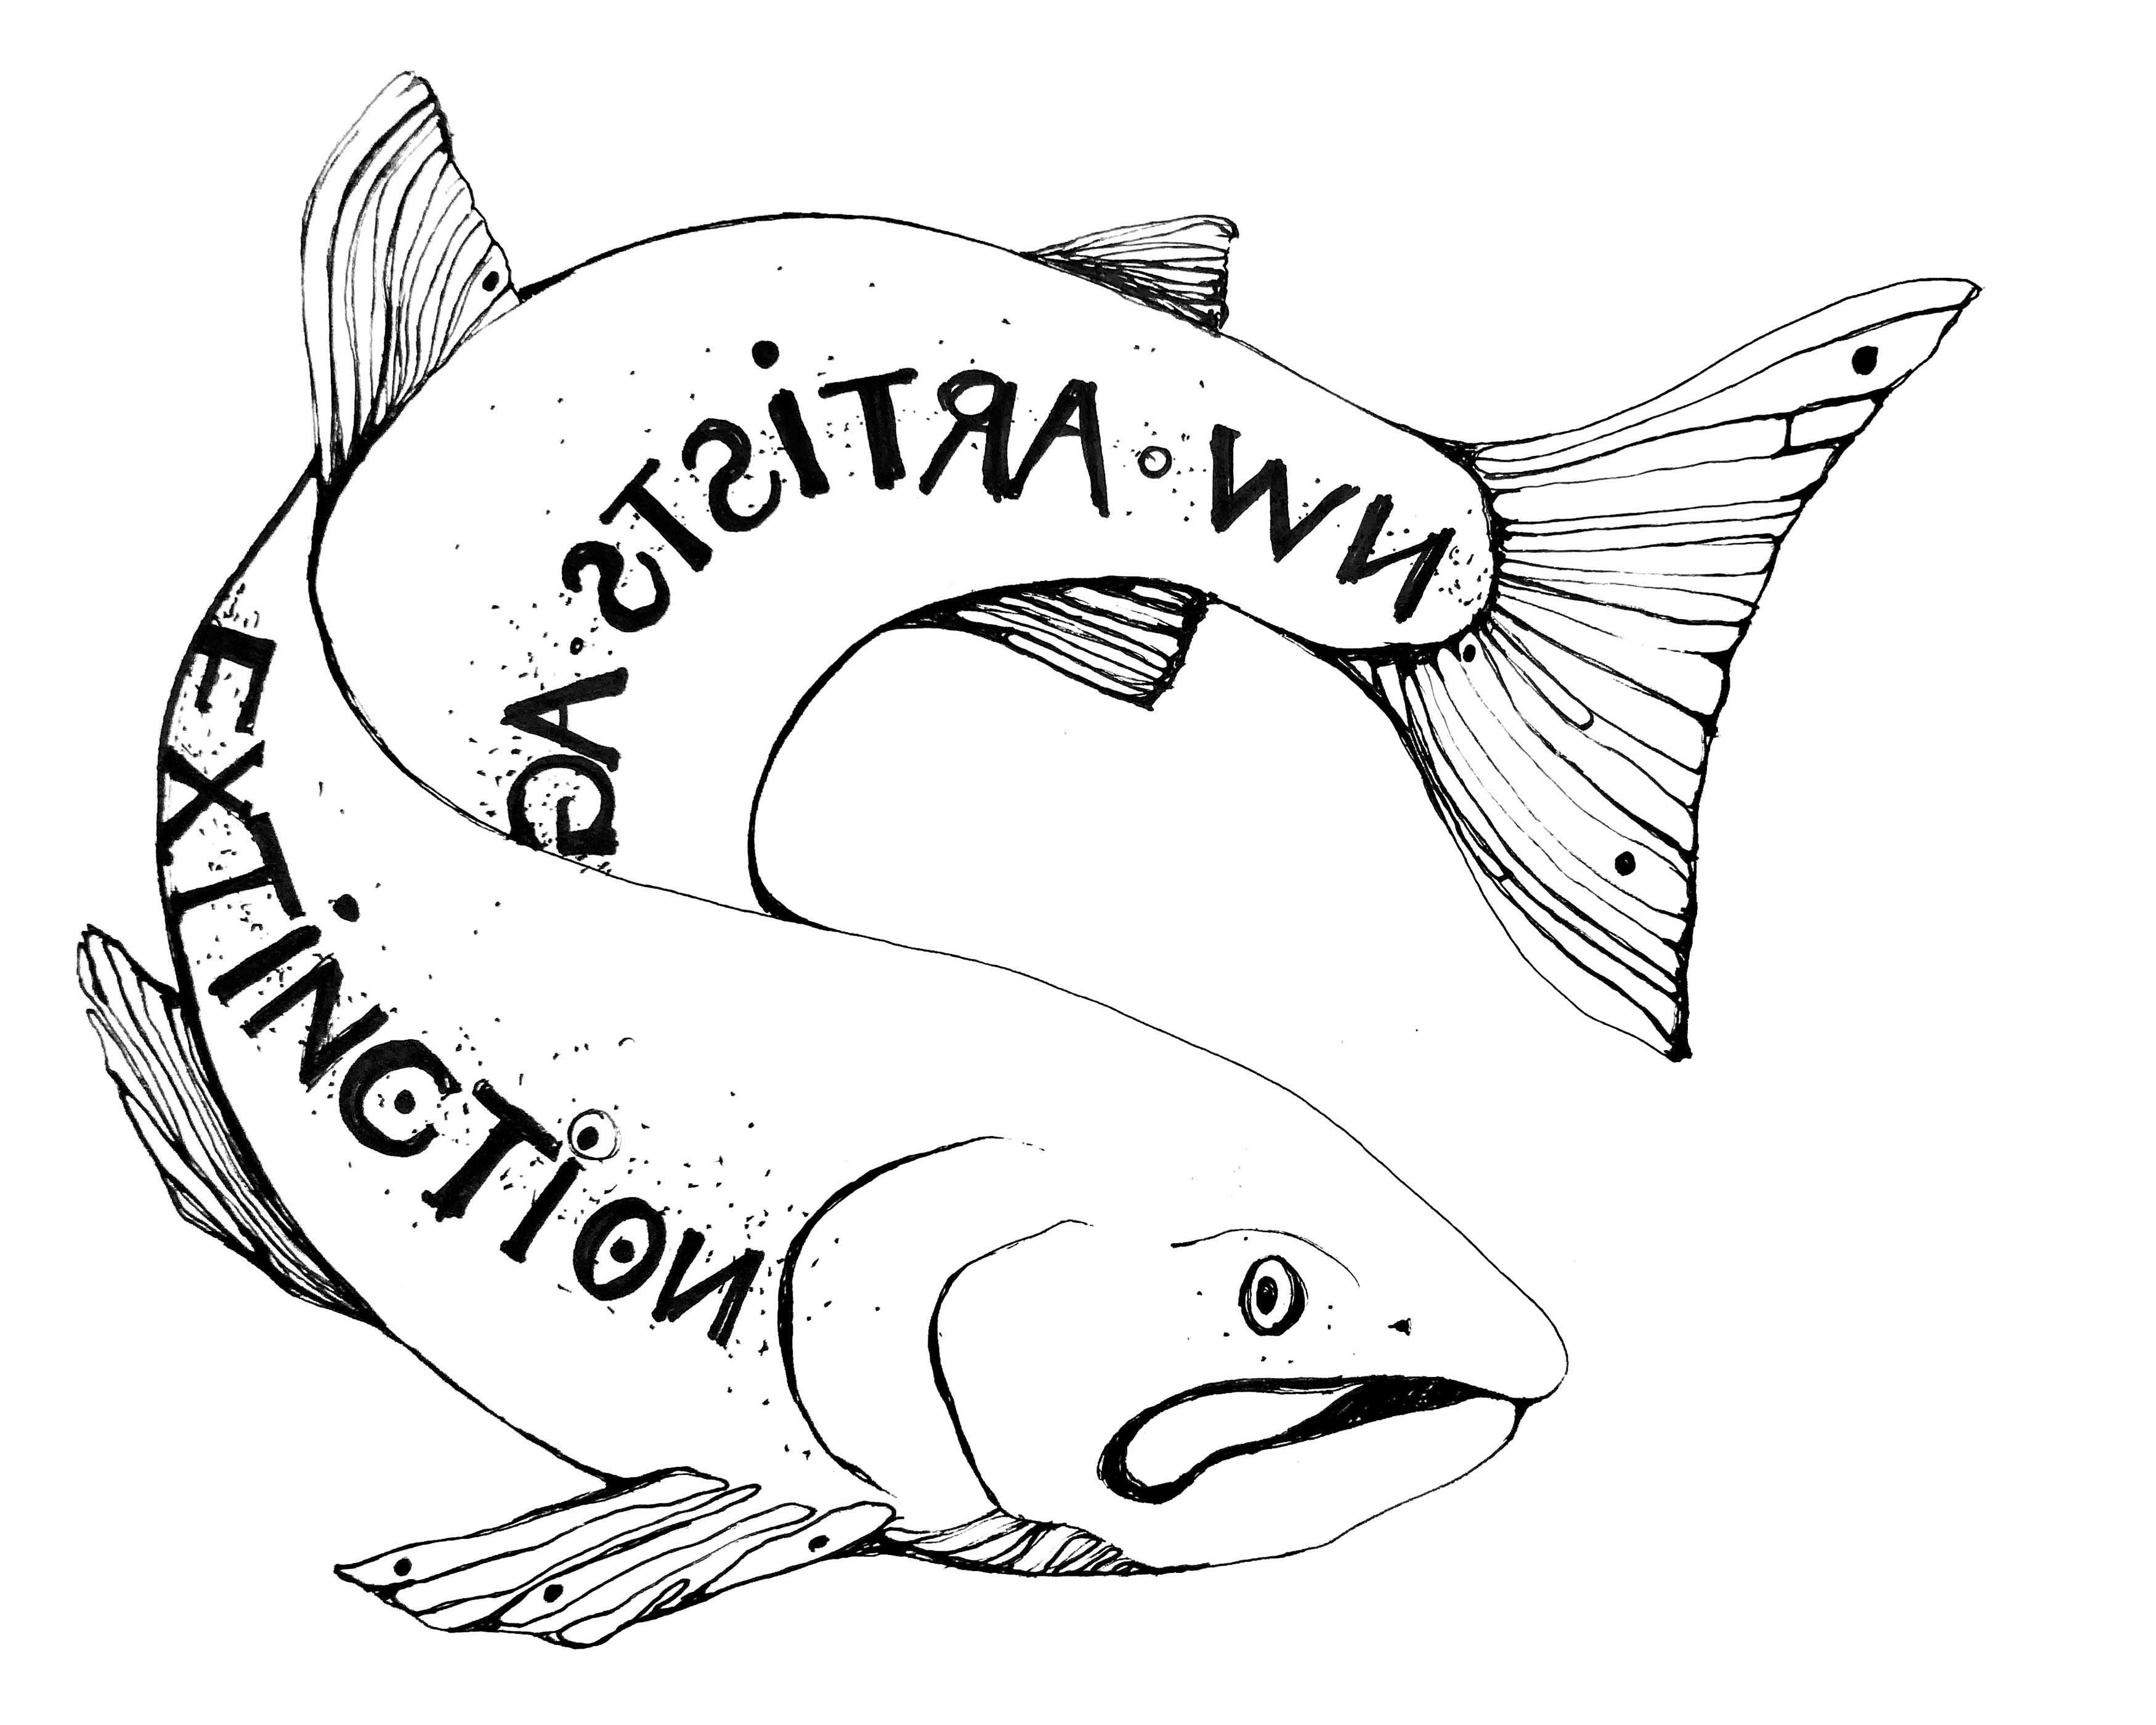 Northwest Artists Against Extinction - Speak For The Salmon